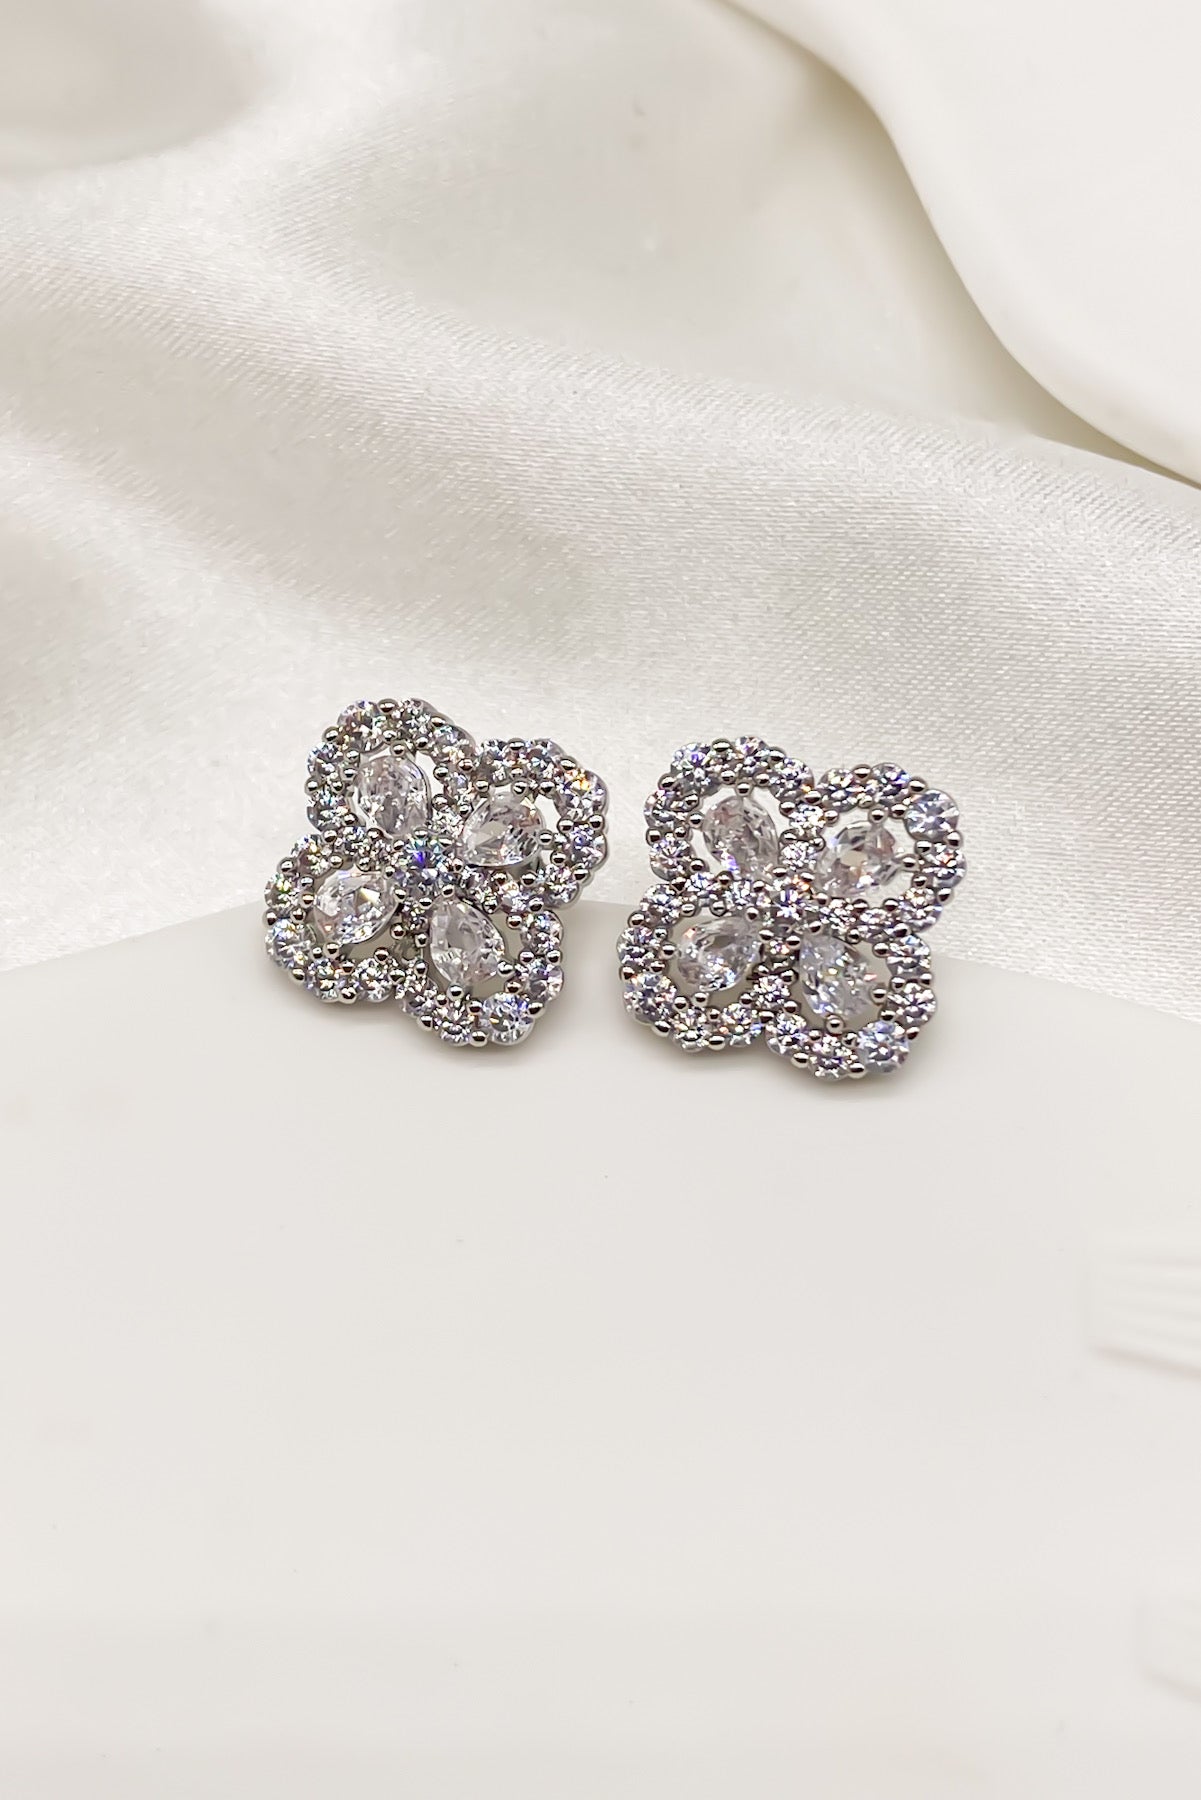 SKYE Shop Chic Modern Elegant Classy Women Jewelry French Parisian Minimalist Tilly Crystal Clover Earrings Silver